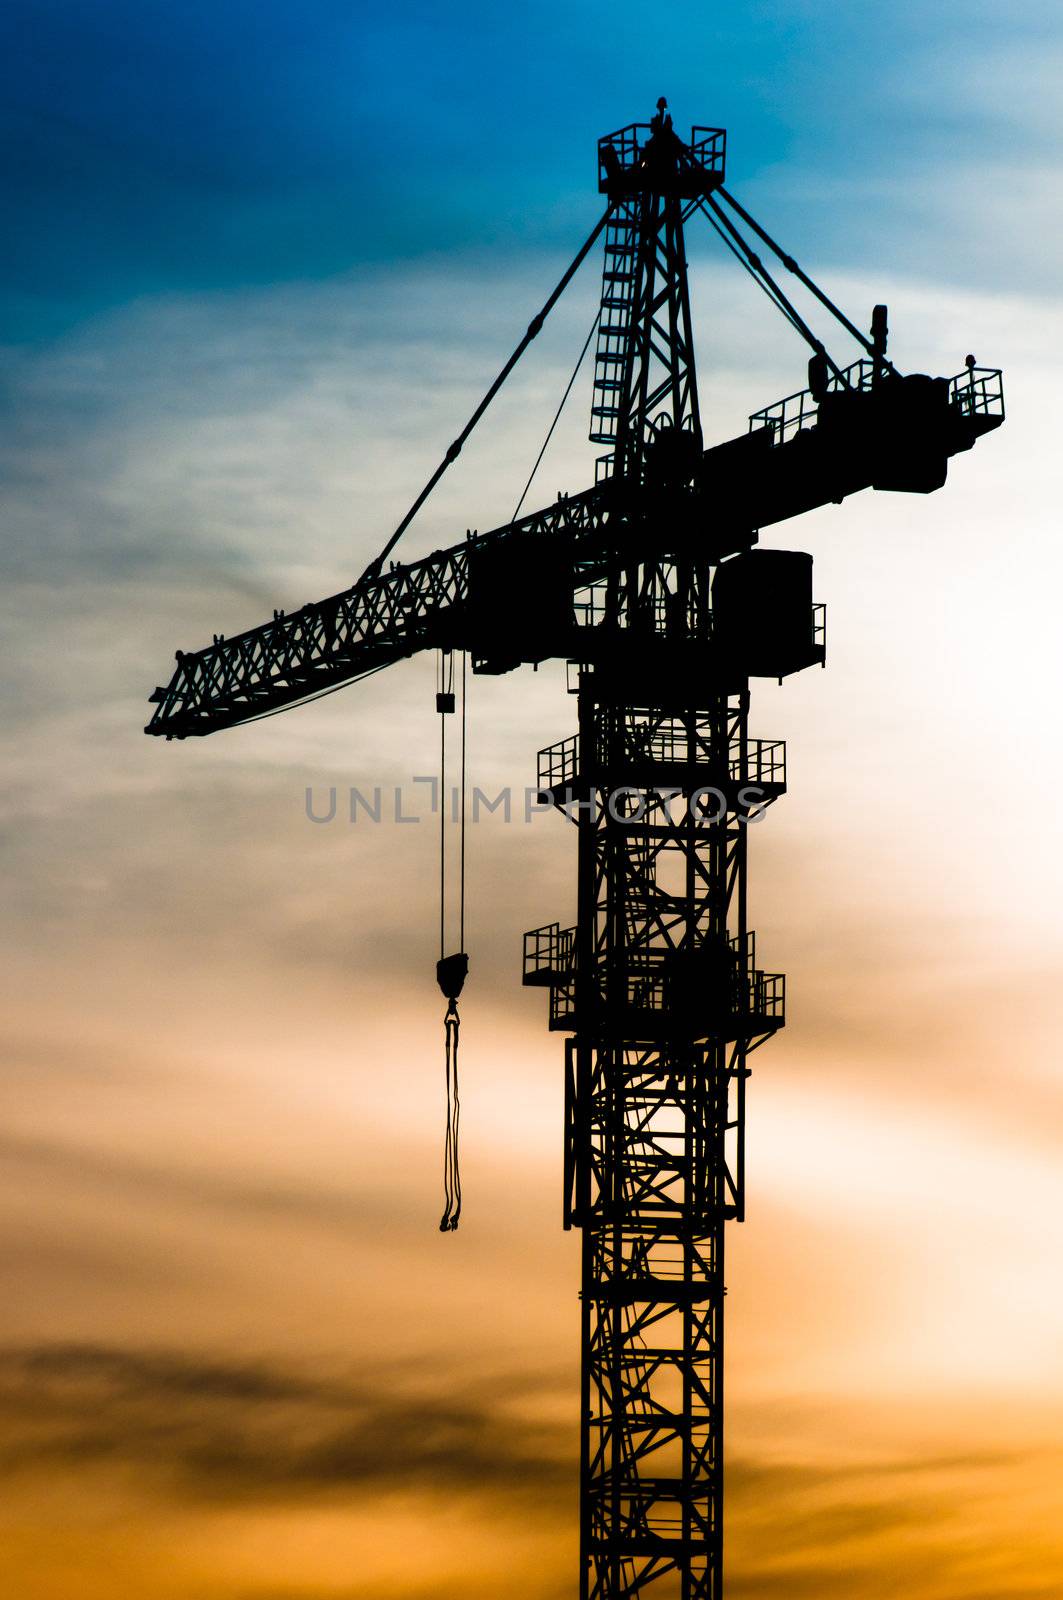 Top part of crane by dmitryelagin